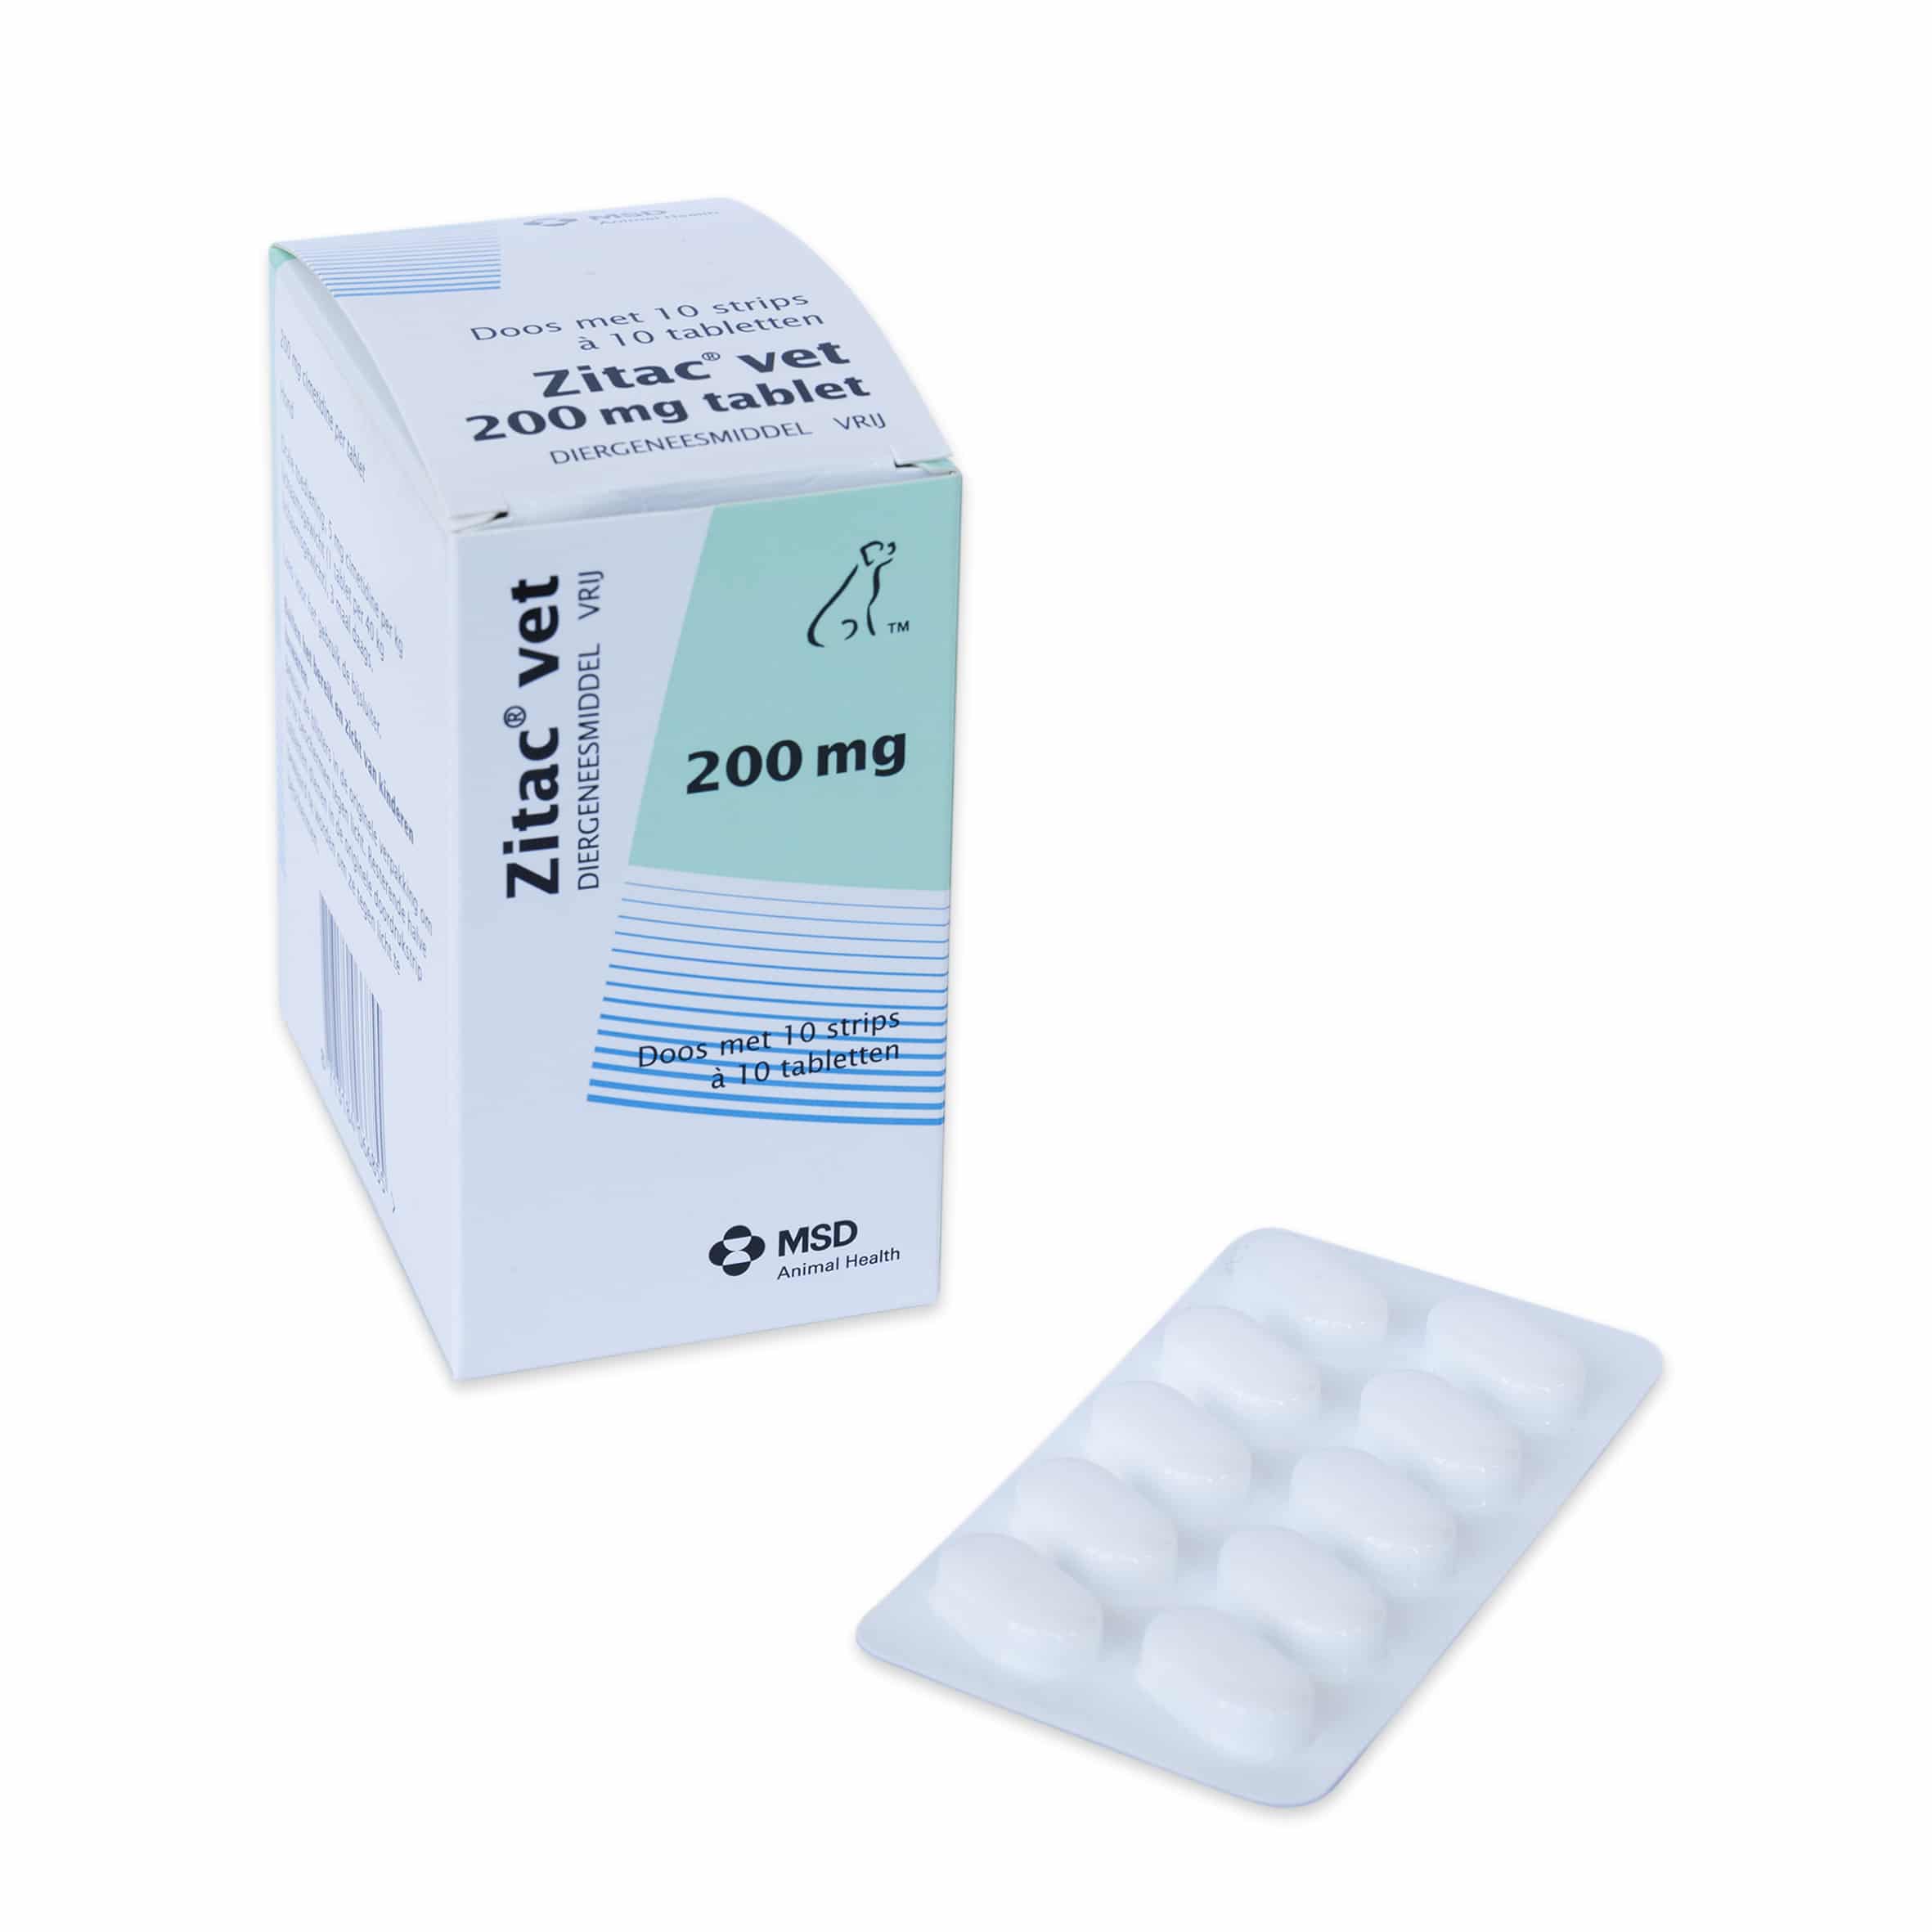 Zitac-vet Zitac Vet 200 mg 10 x 10 tabletten